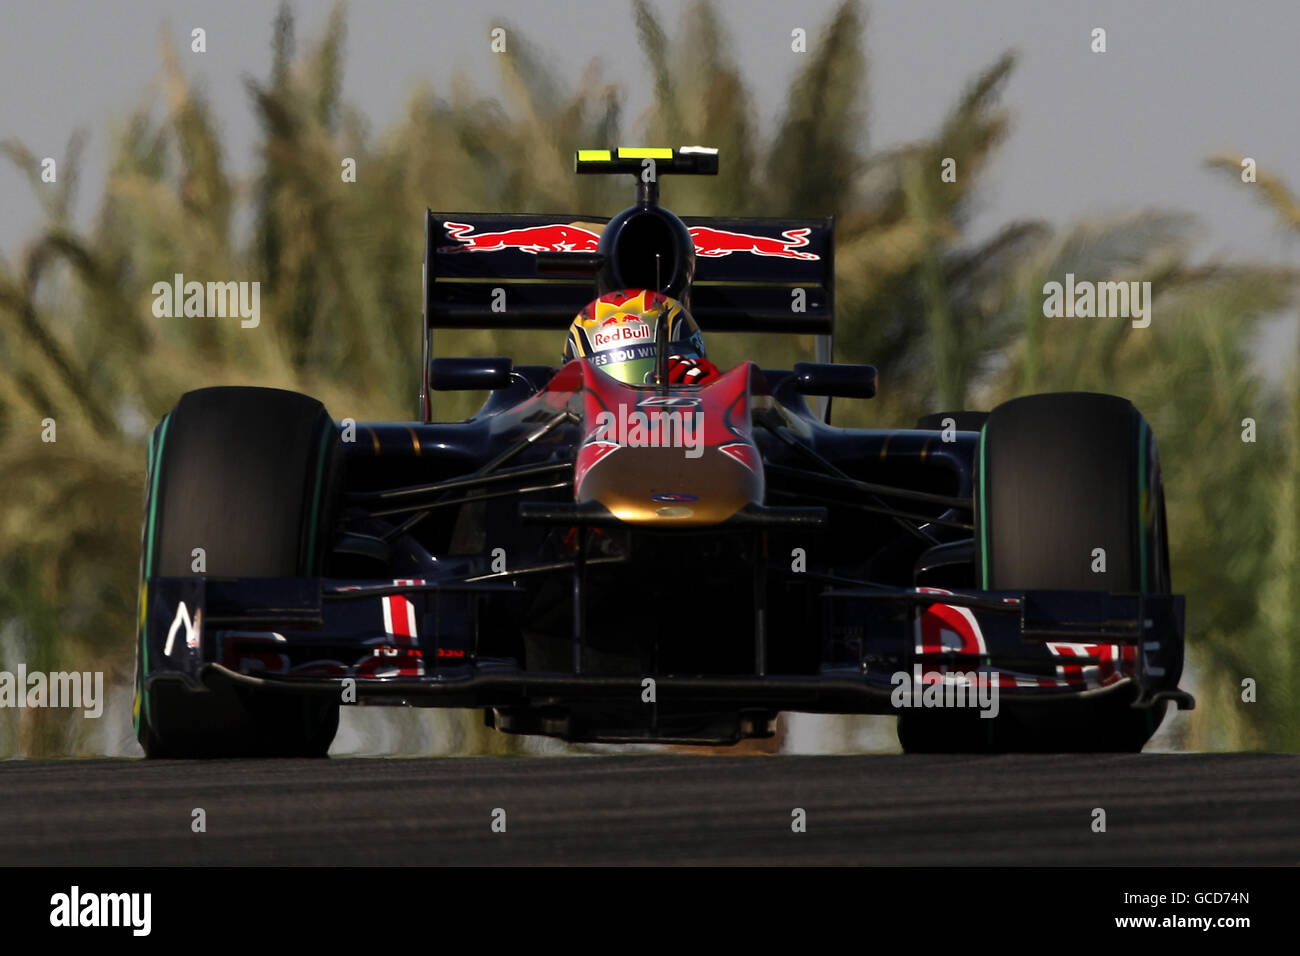 Toro Rosso's Jaime Alguersuari during the Gulf Air Bahrain Grand Prix at the Bahrain International Circuit in Sakhir, Bahrain Stock Photo